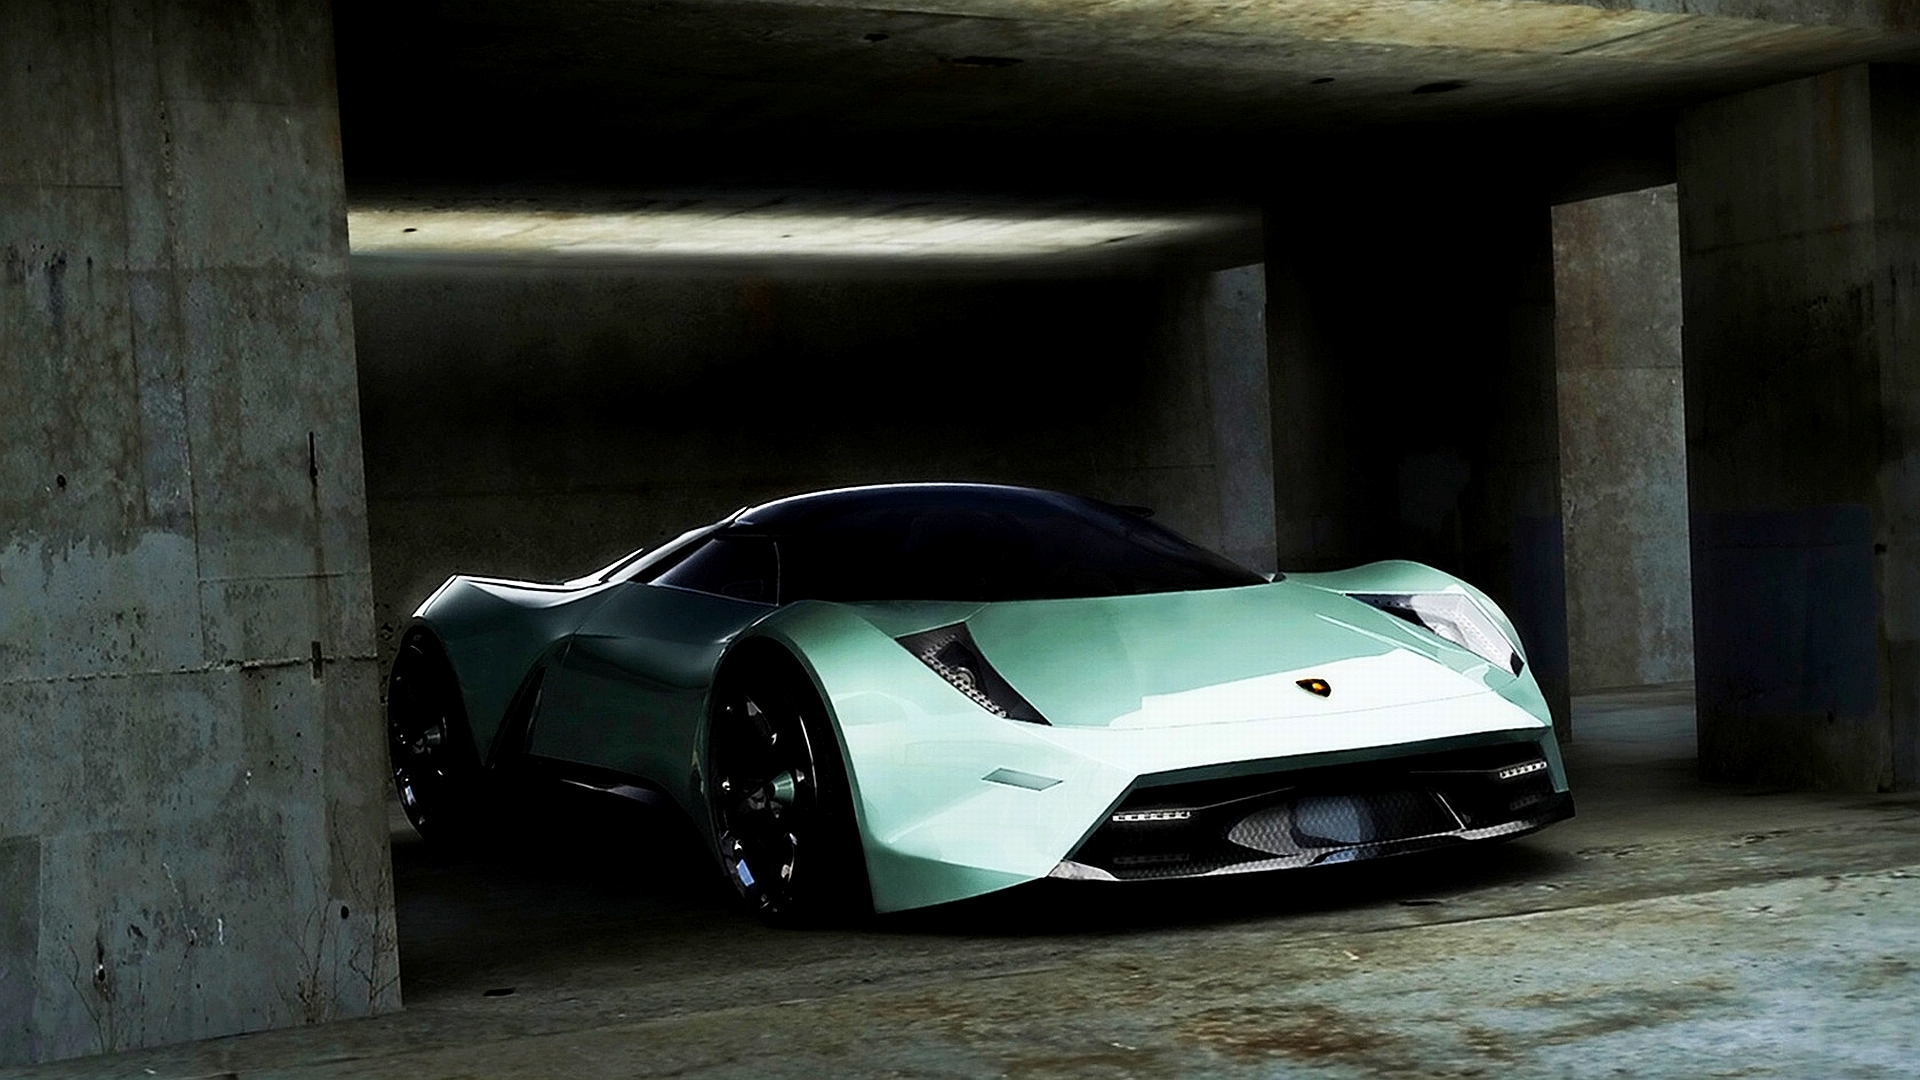 Lamborghini Insecta concept car, a futuristic vehicle combining elegant design with sleek lines.